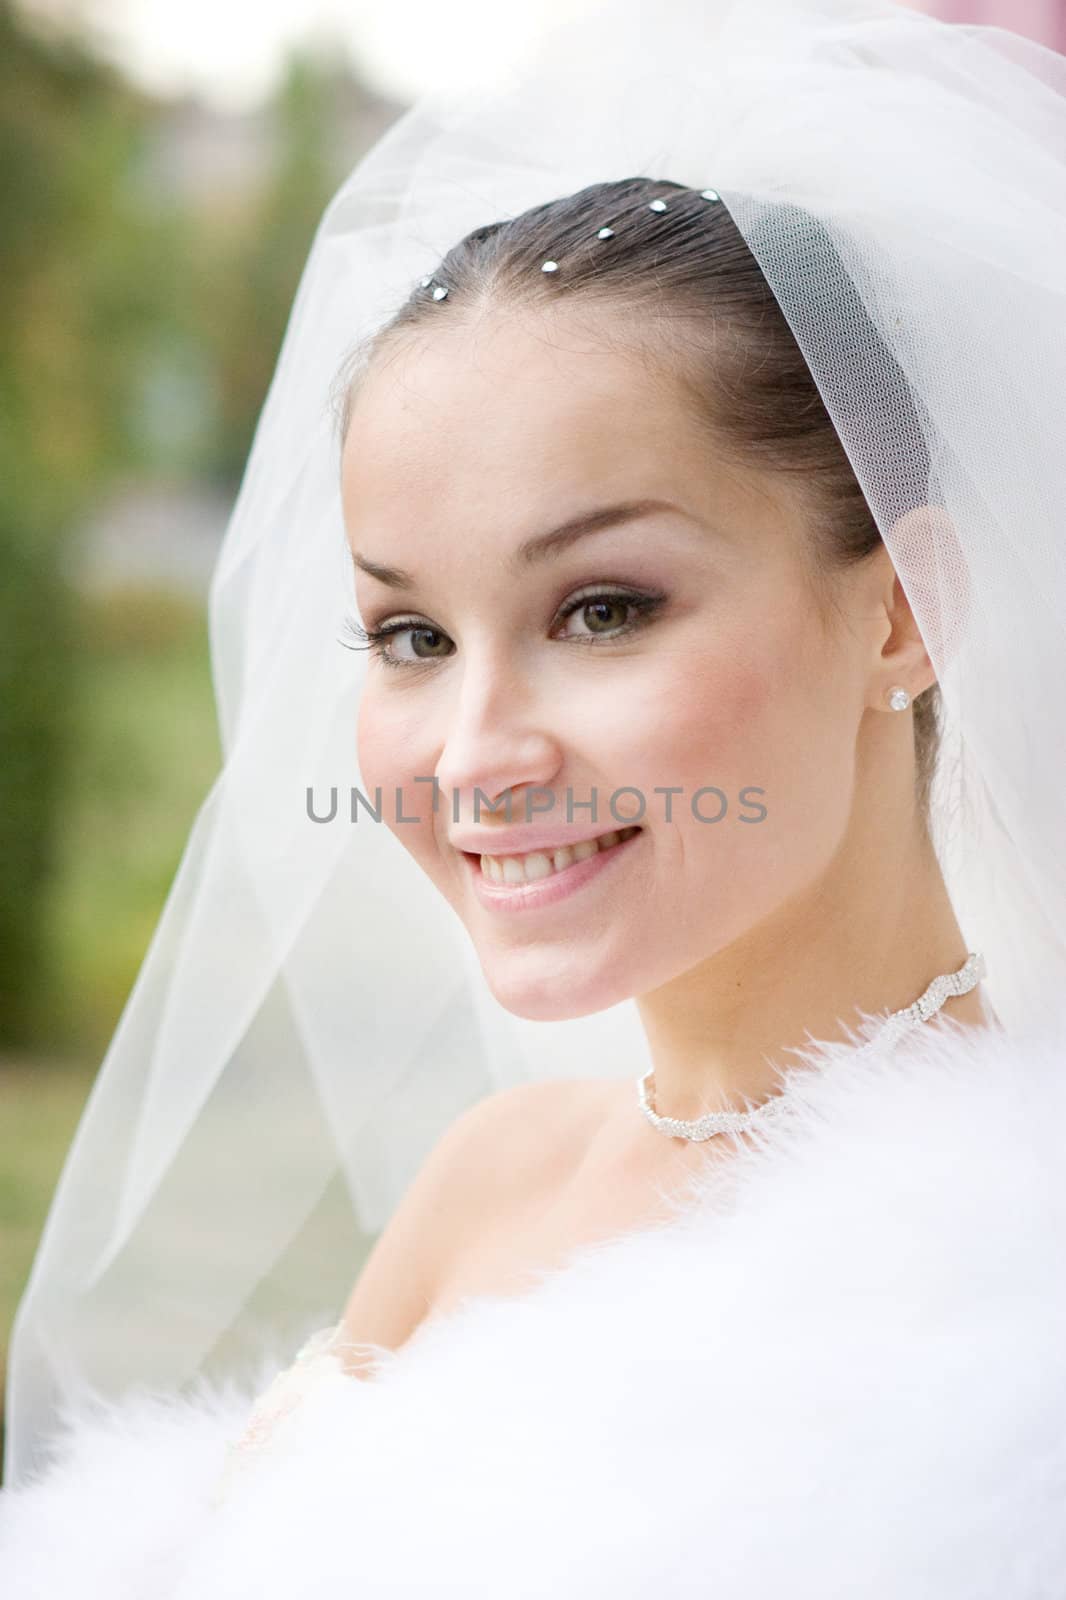 The beautiful smiling bride in a white fur cape